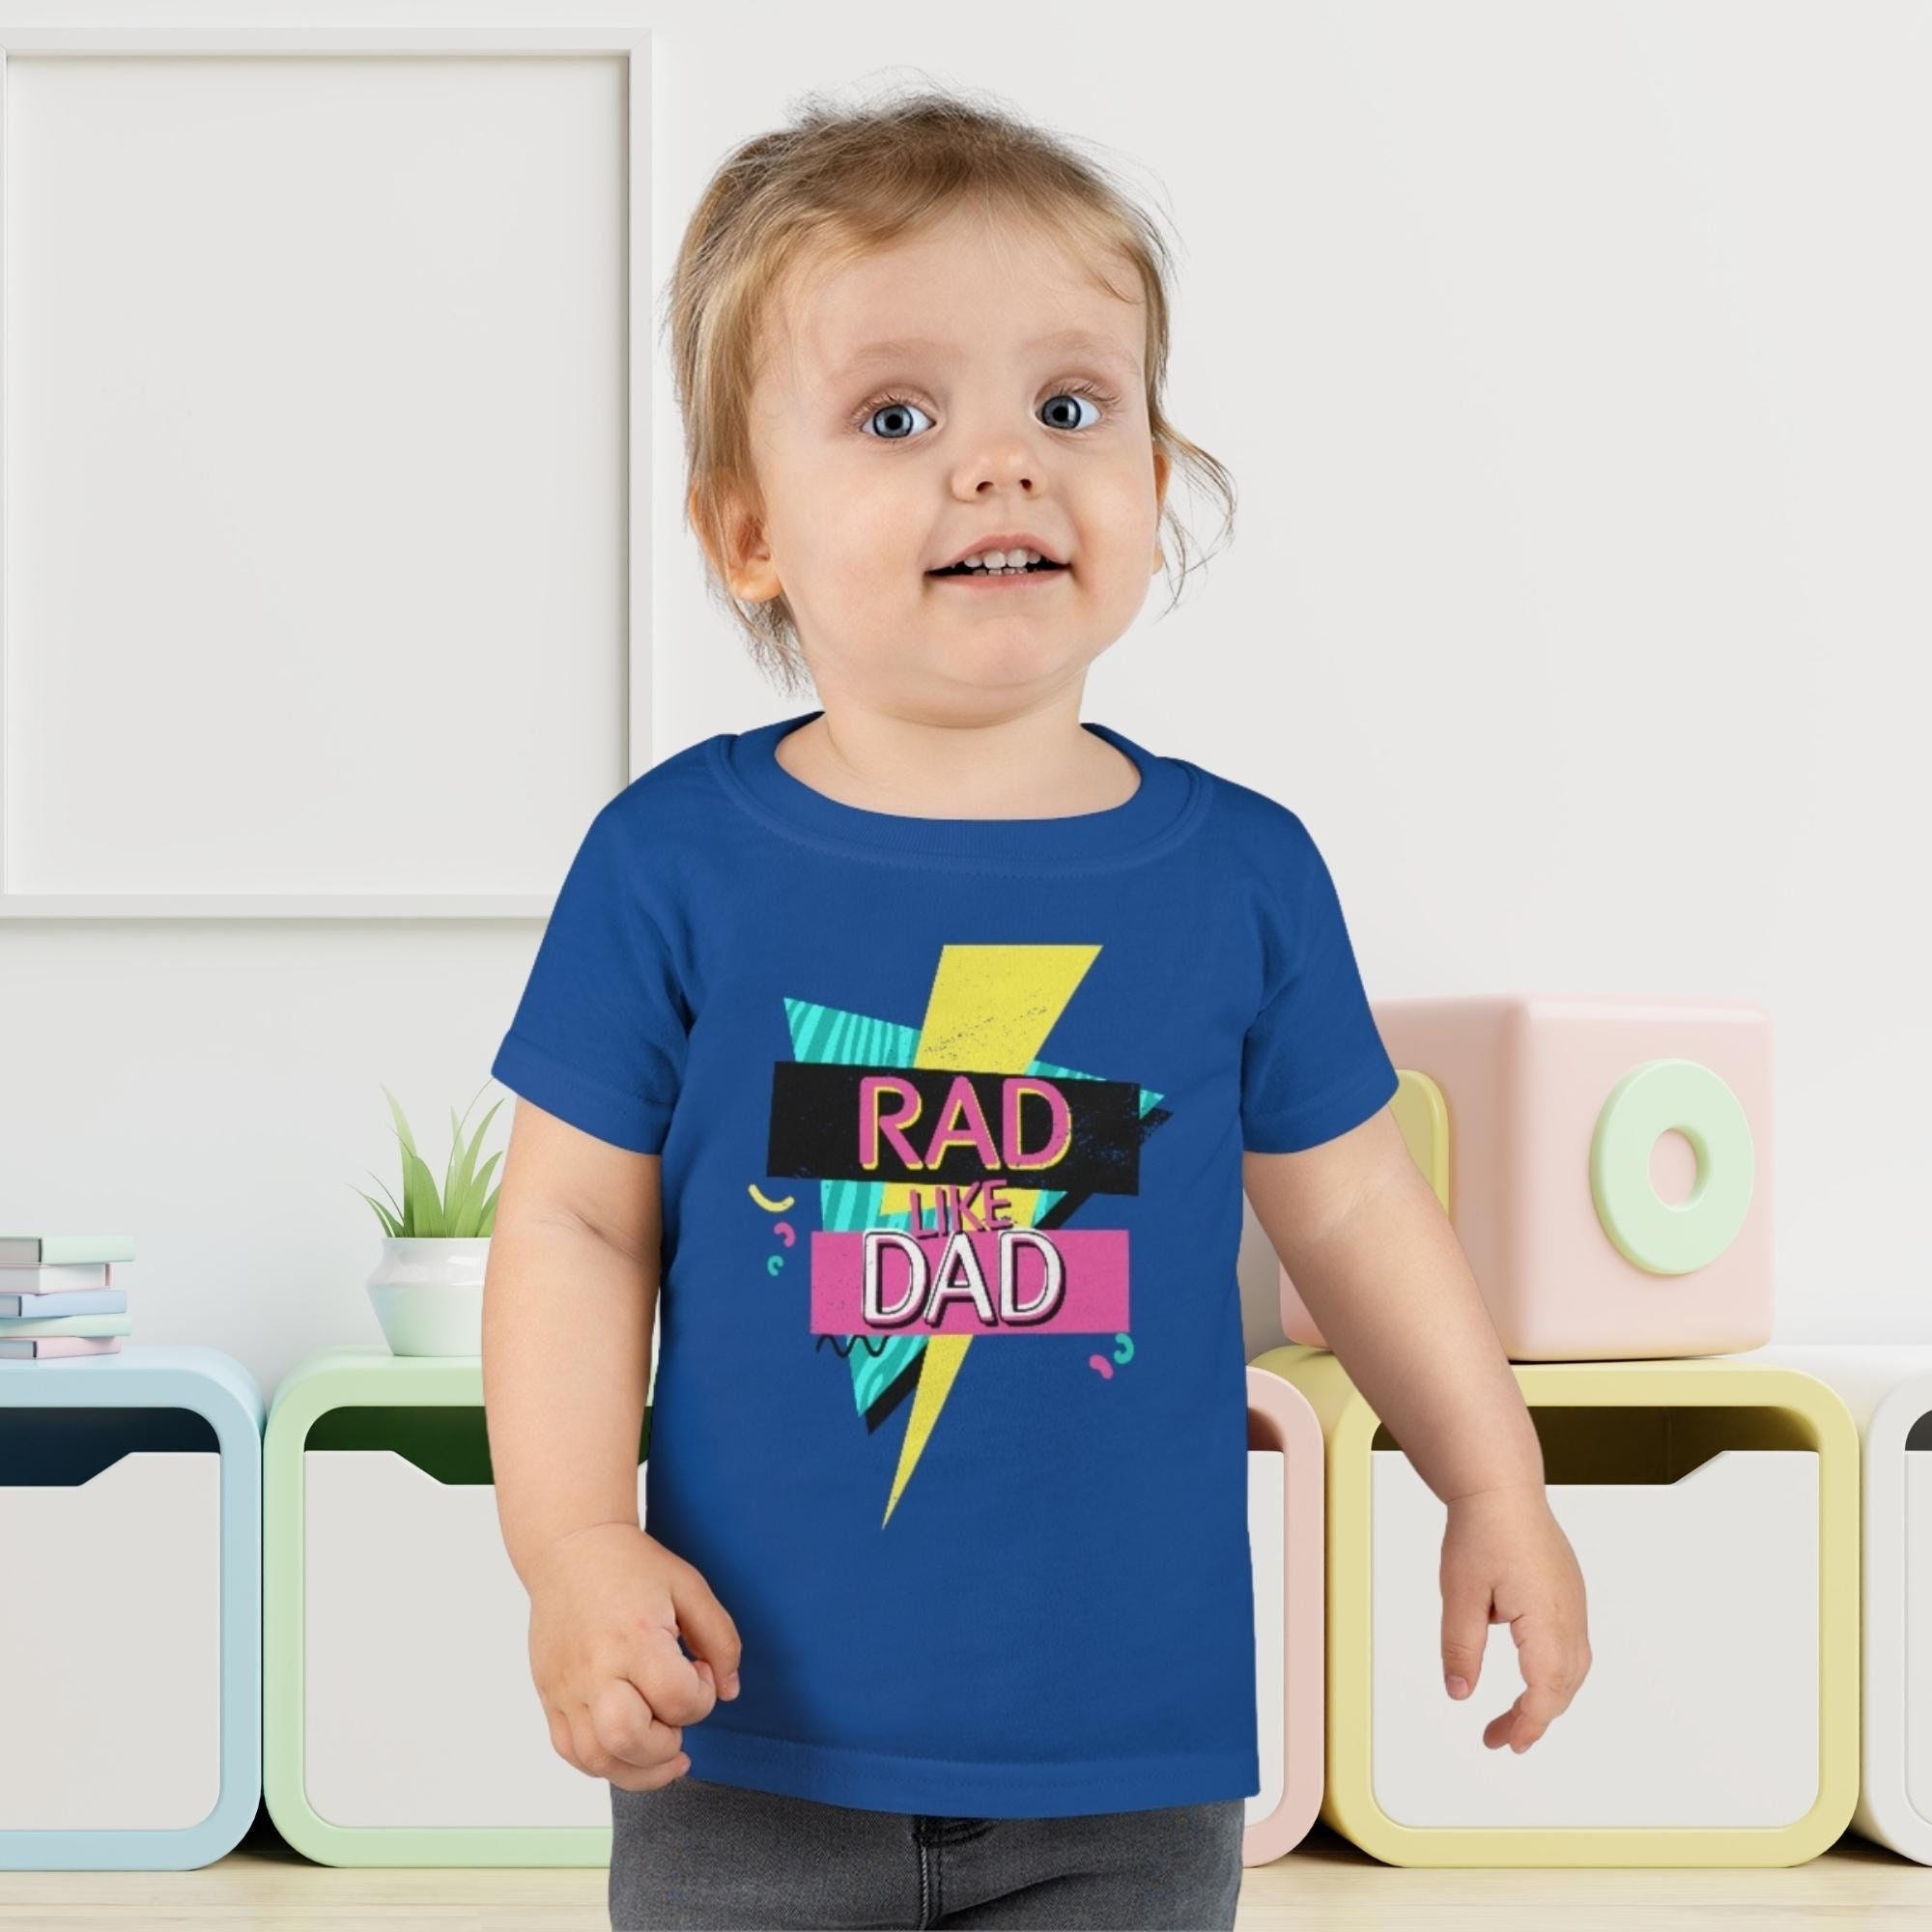 Rad Like Dad Toddler T-Shirt | Retro 90s Kids Shirt | 80s Dad and Child Shirt